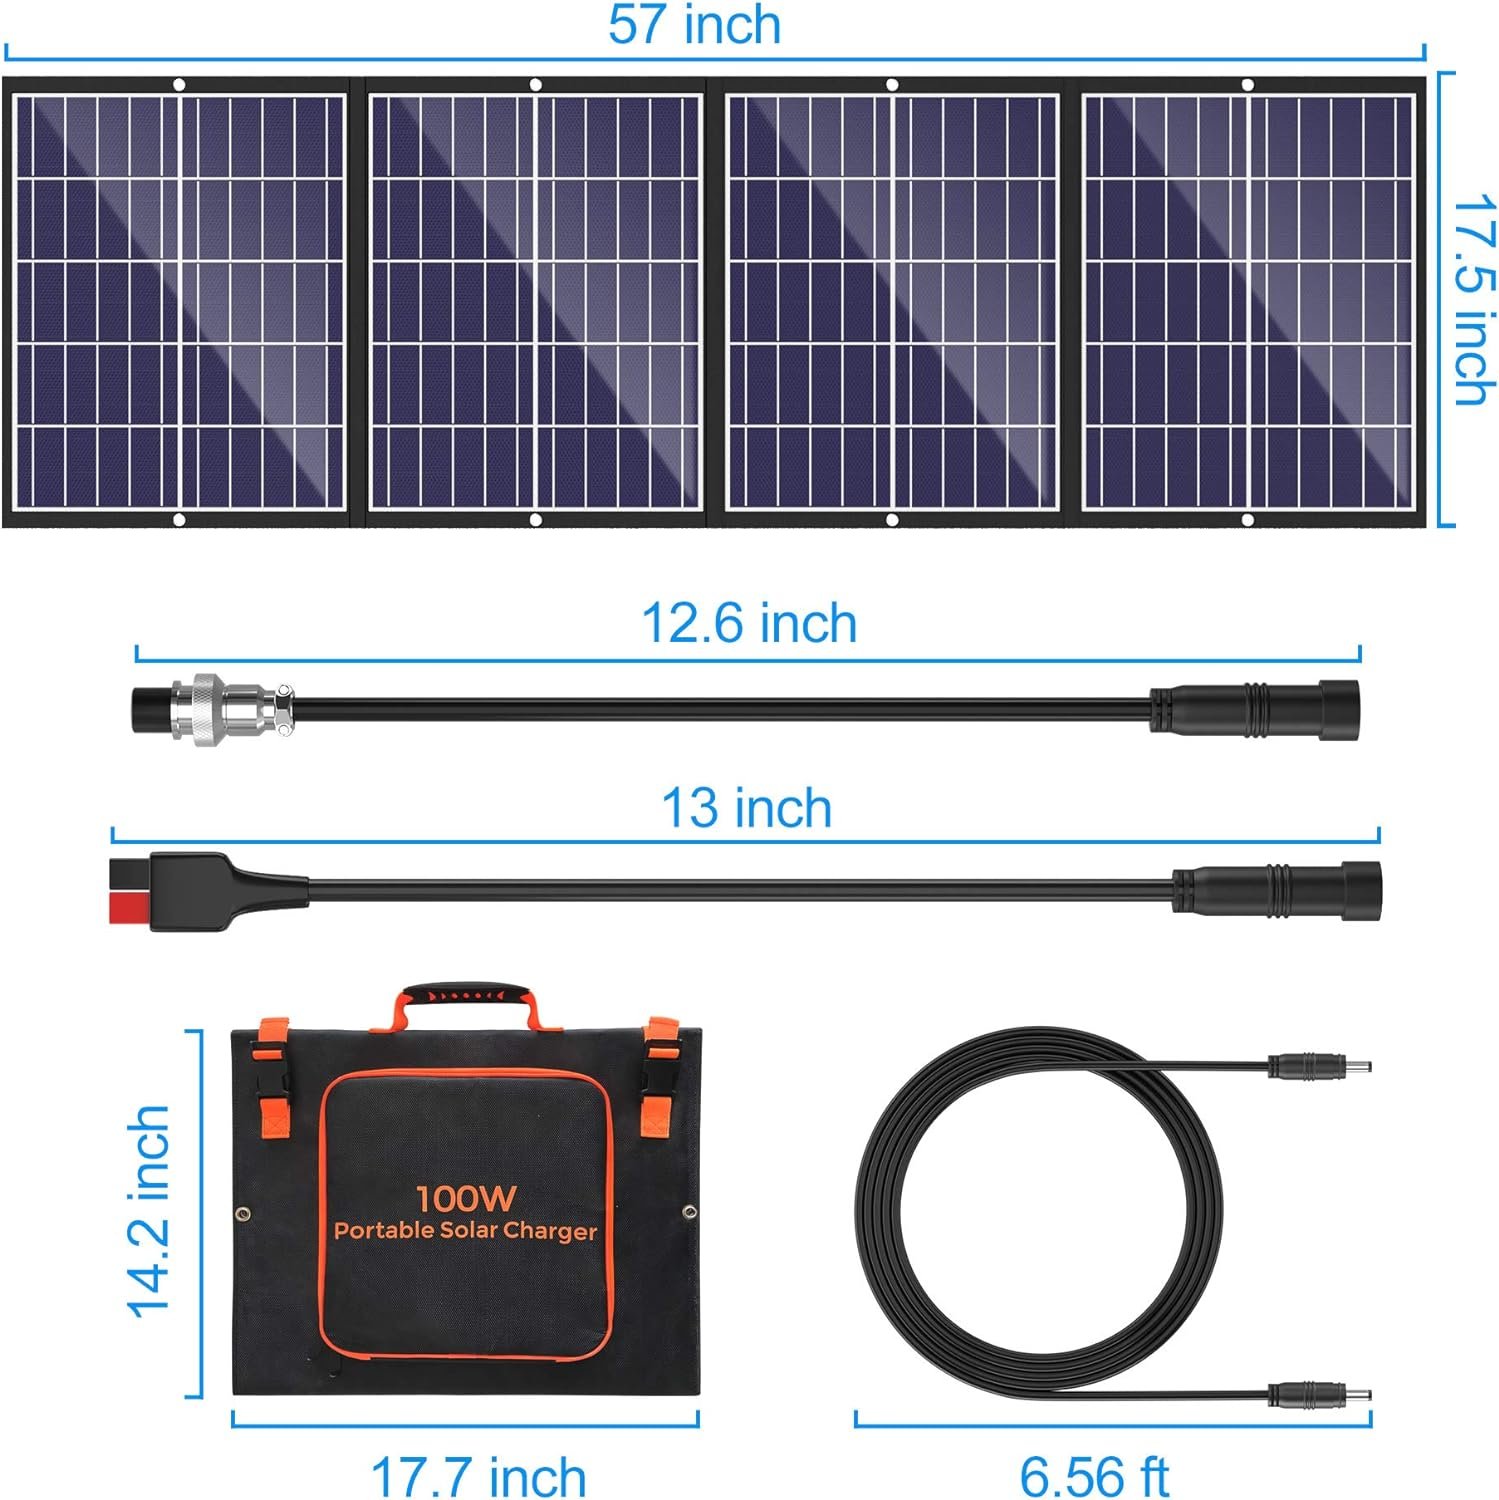 100W Portable Solar Panel Kit Review